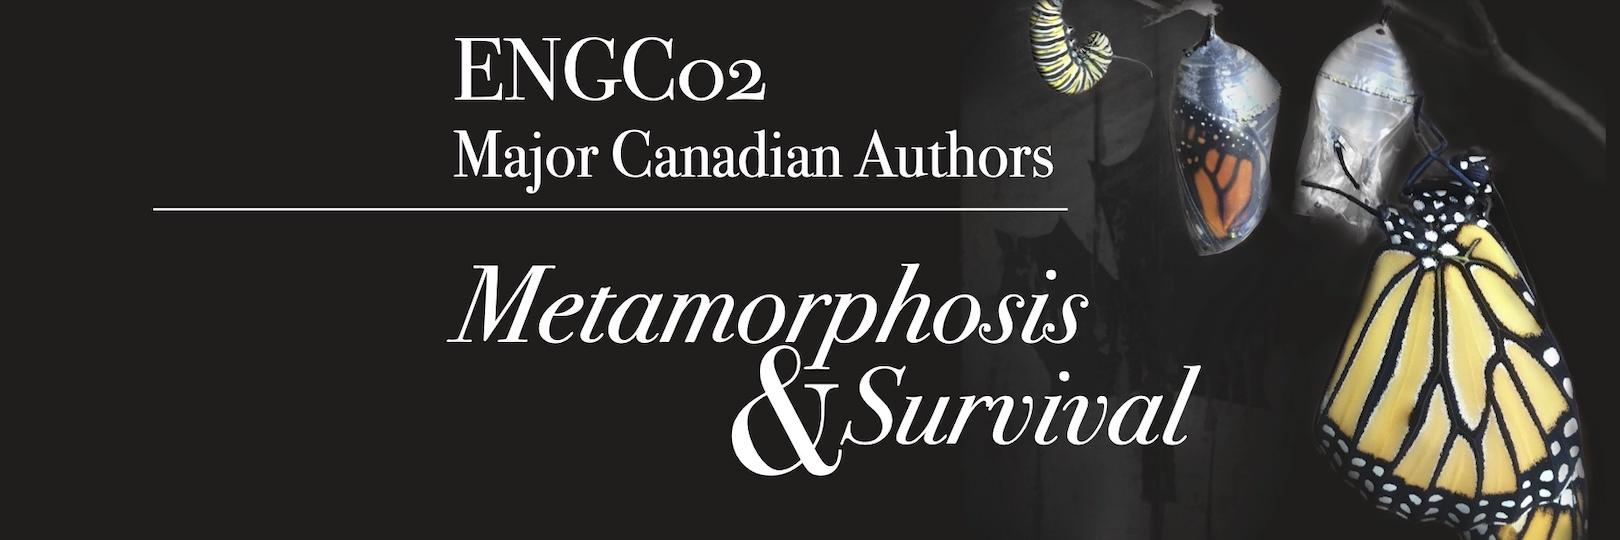 ENGC02: Major Canadian Authors - butterflies against black background